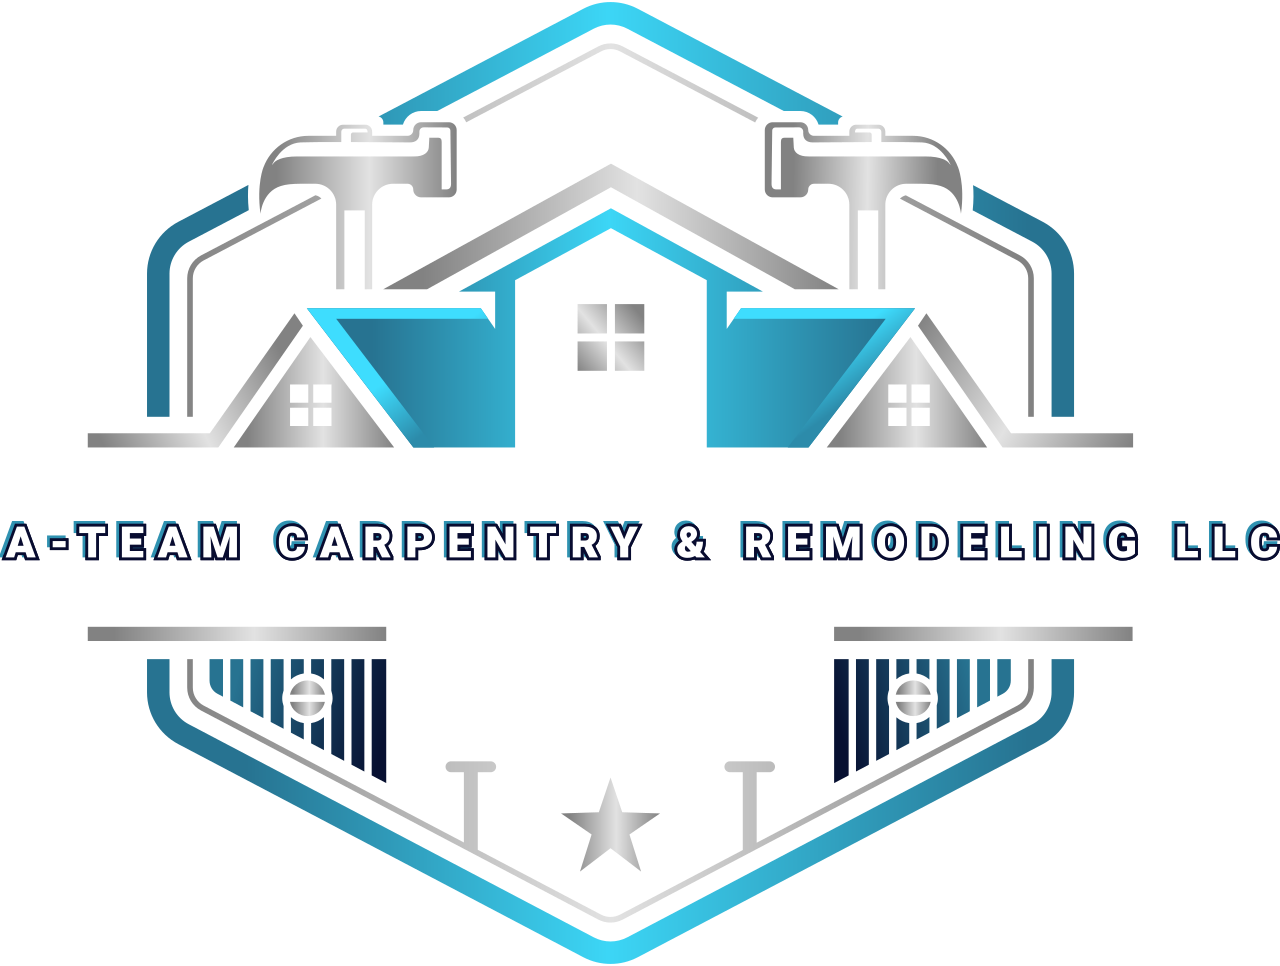 A-Team Carpentry & Remodeling llc's logo